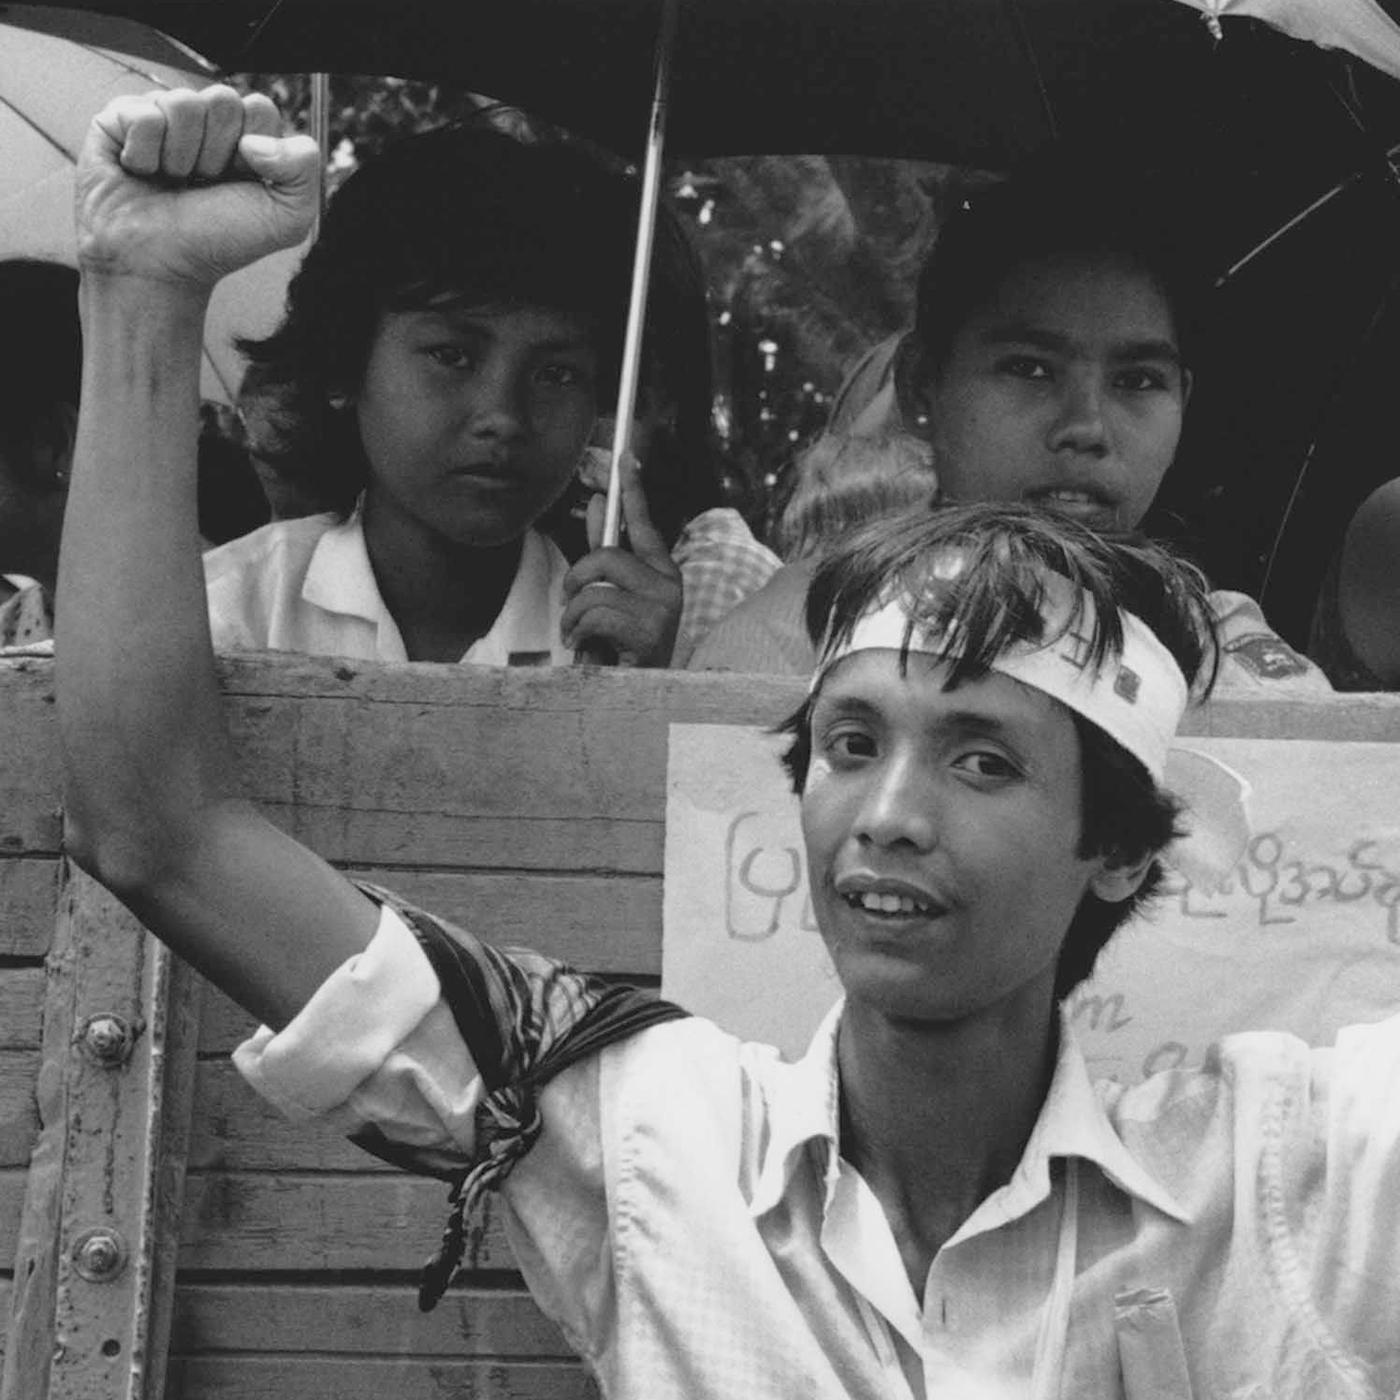 Thumbnail for "Burma '88: Buried History".